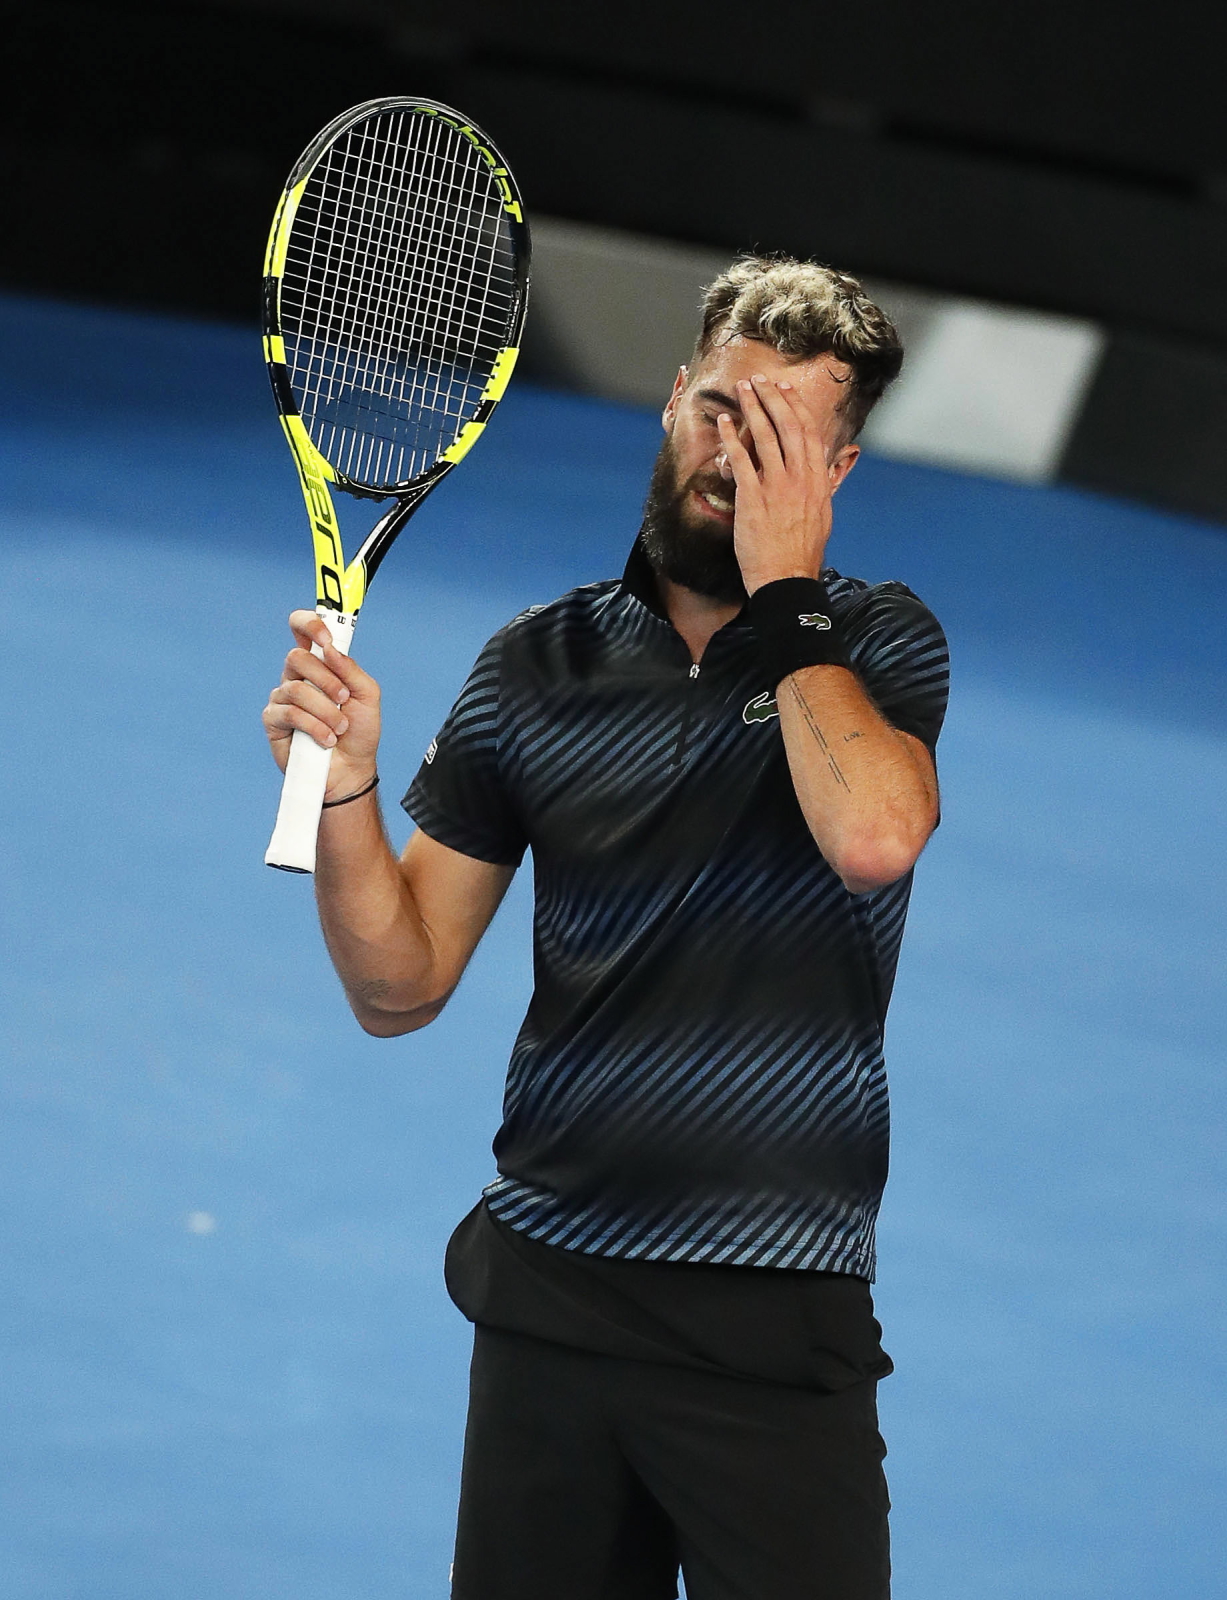 Francuz Benoit Paire podczas meczu w ramach Australian Open. Fot. PAP/EPA/LYNN BO BO